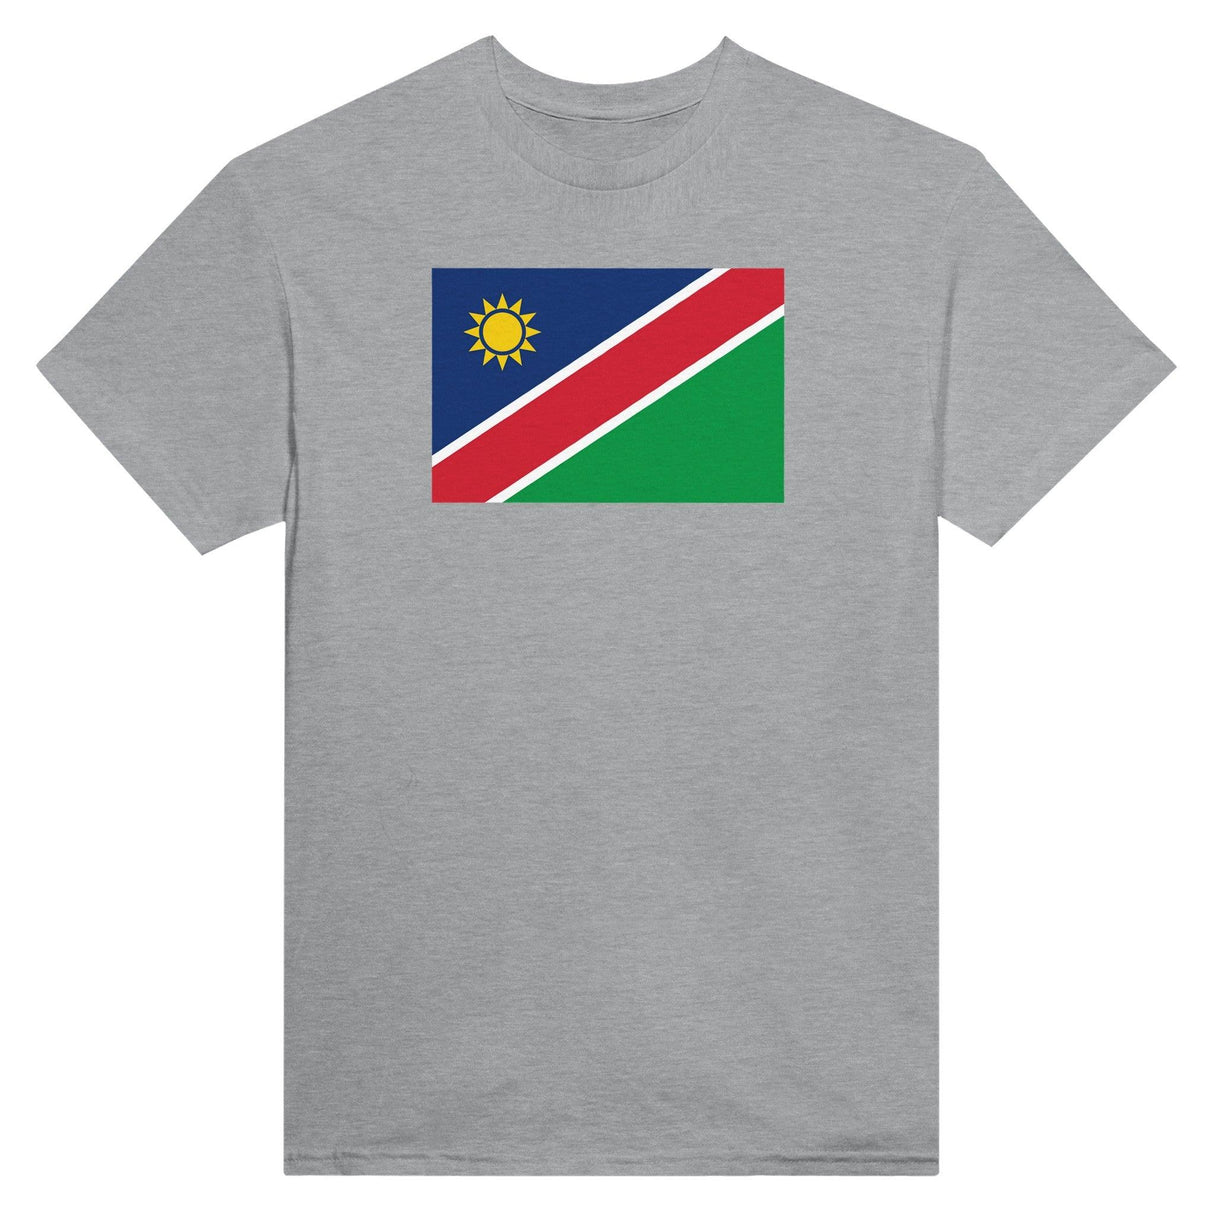 T-shirt Drapeau de la Namibie - Pixelforma